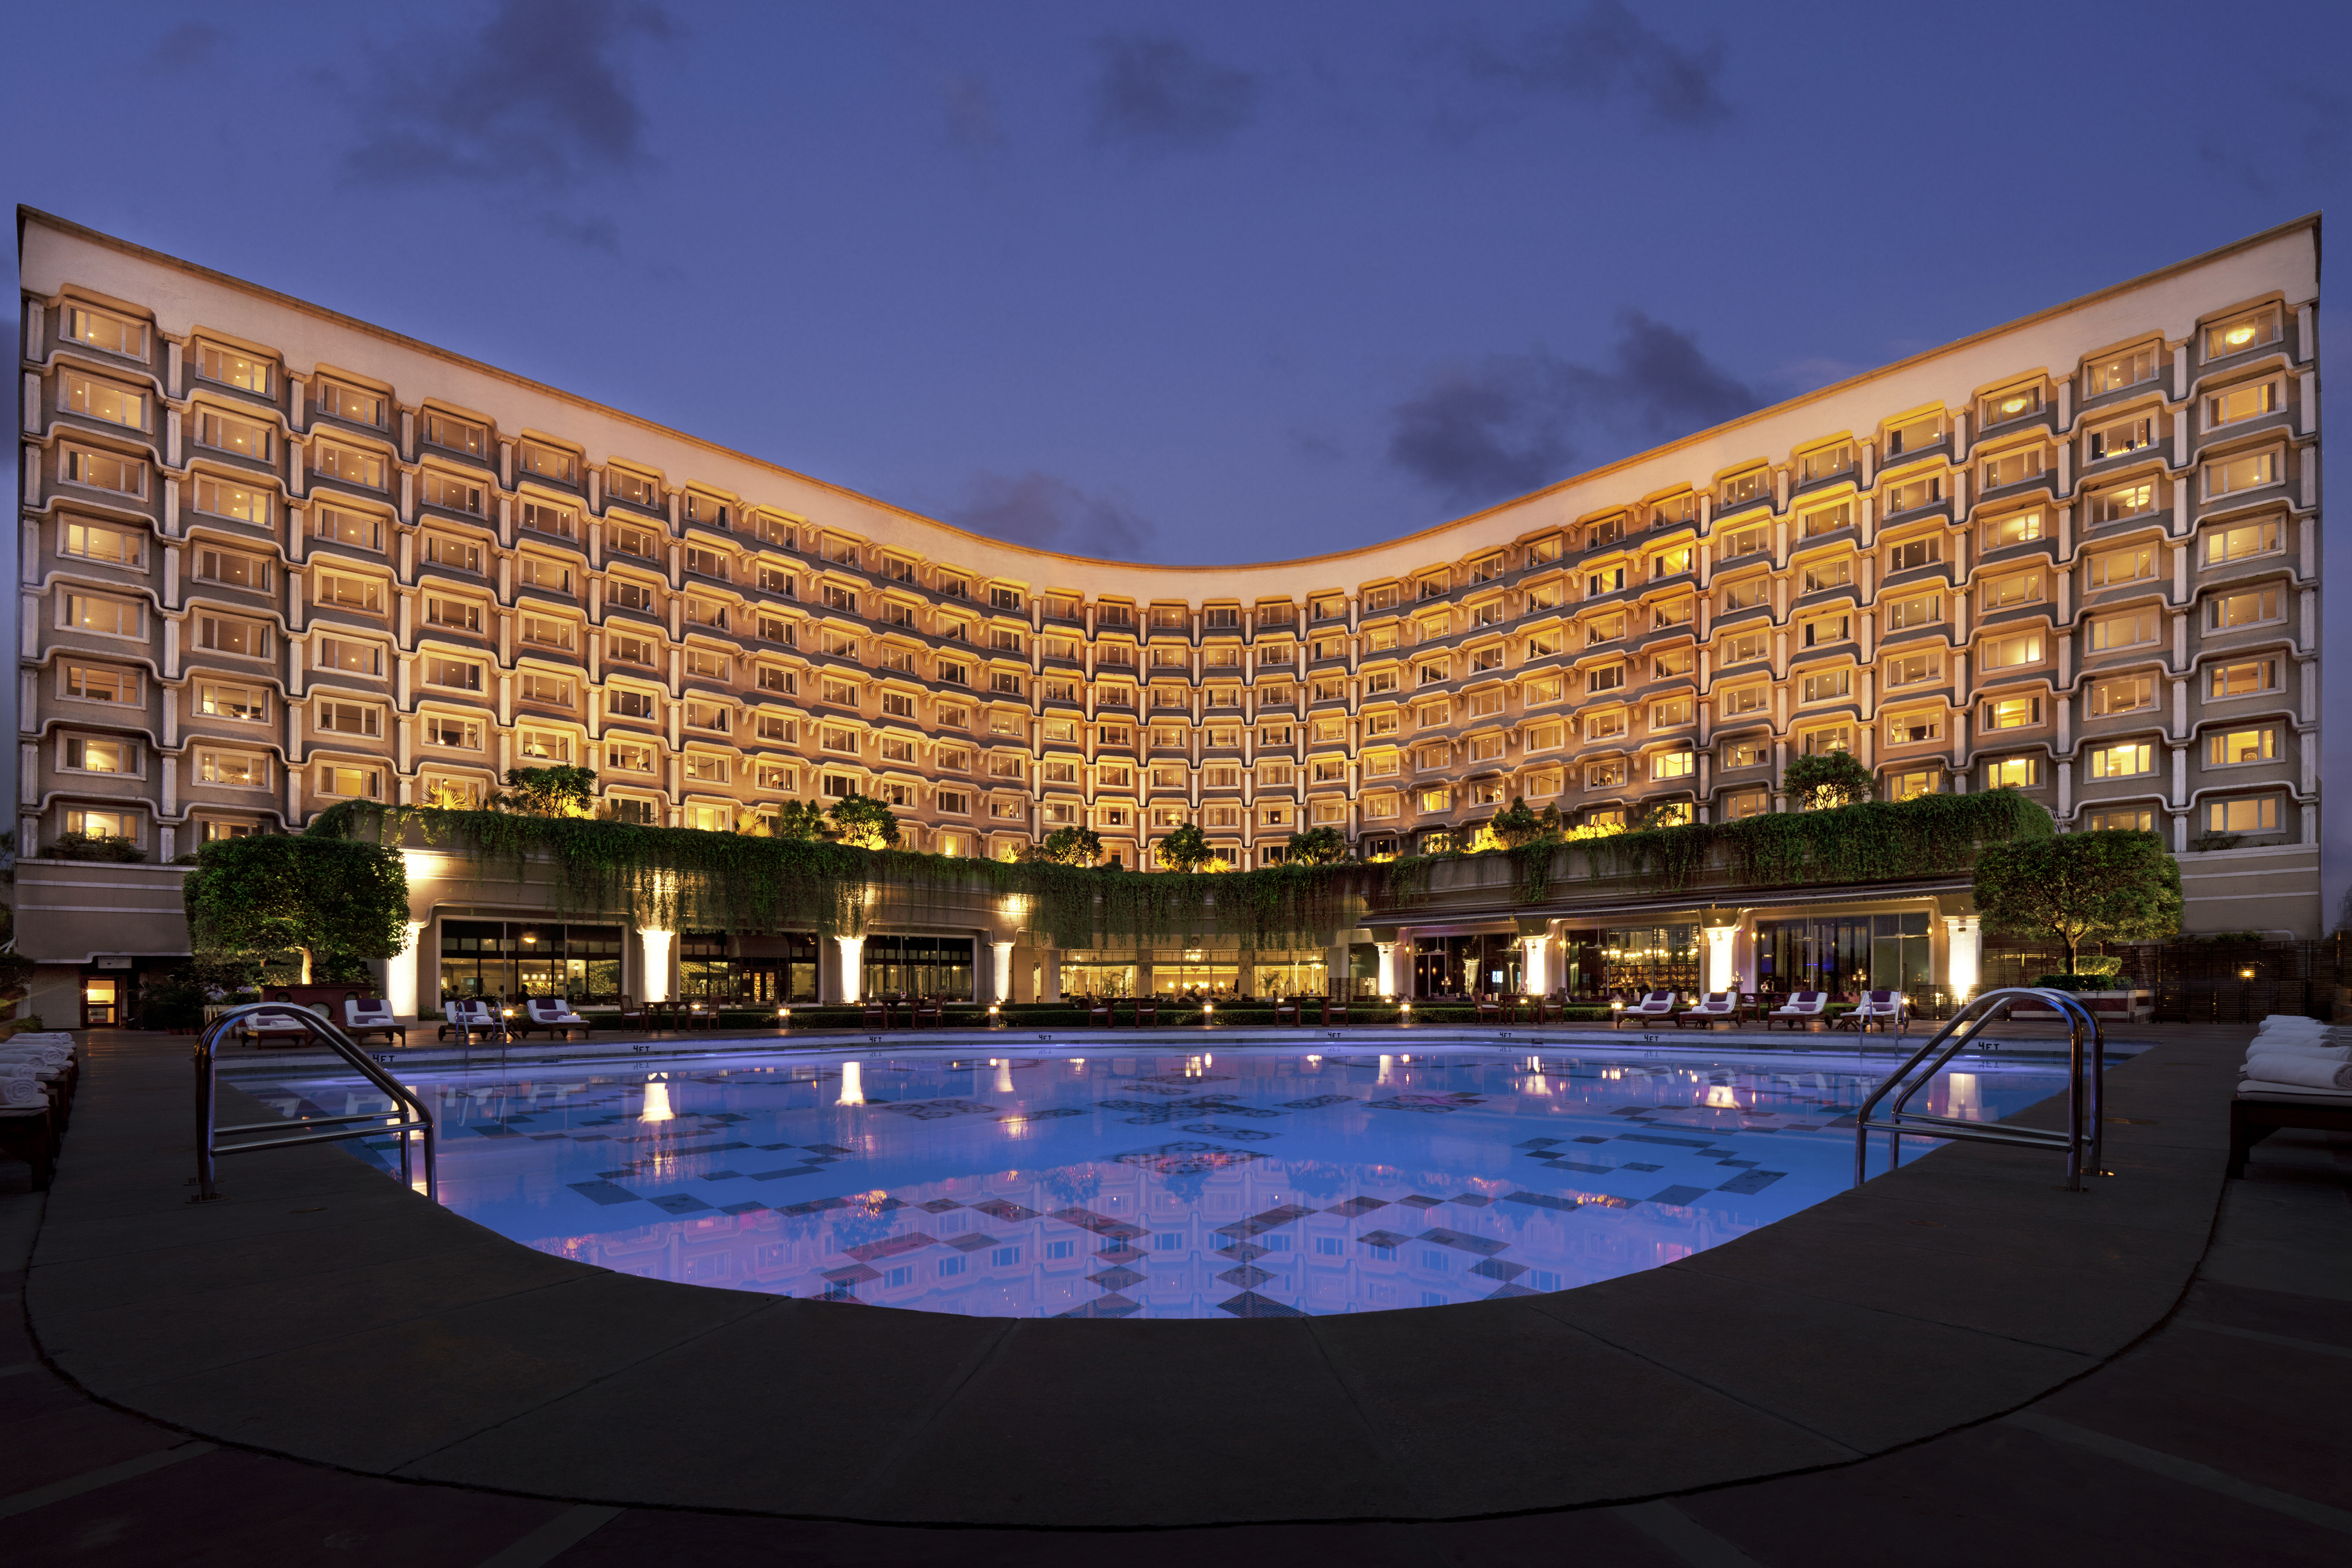 Top 6 luxury hotels in Delhi - QuirkyByte